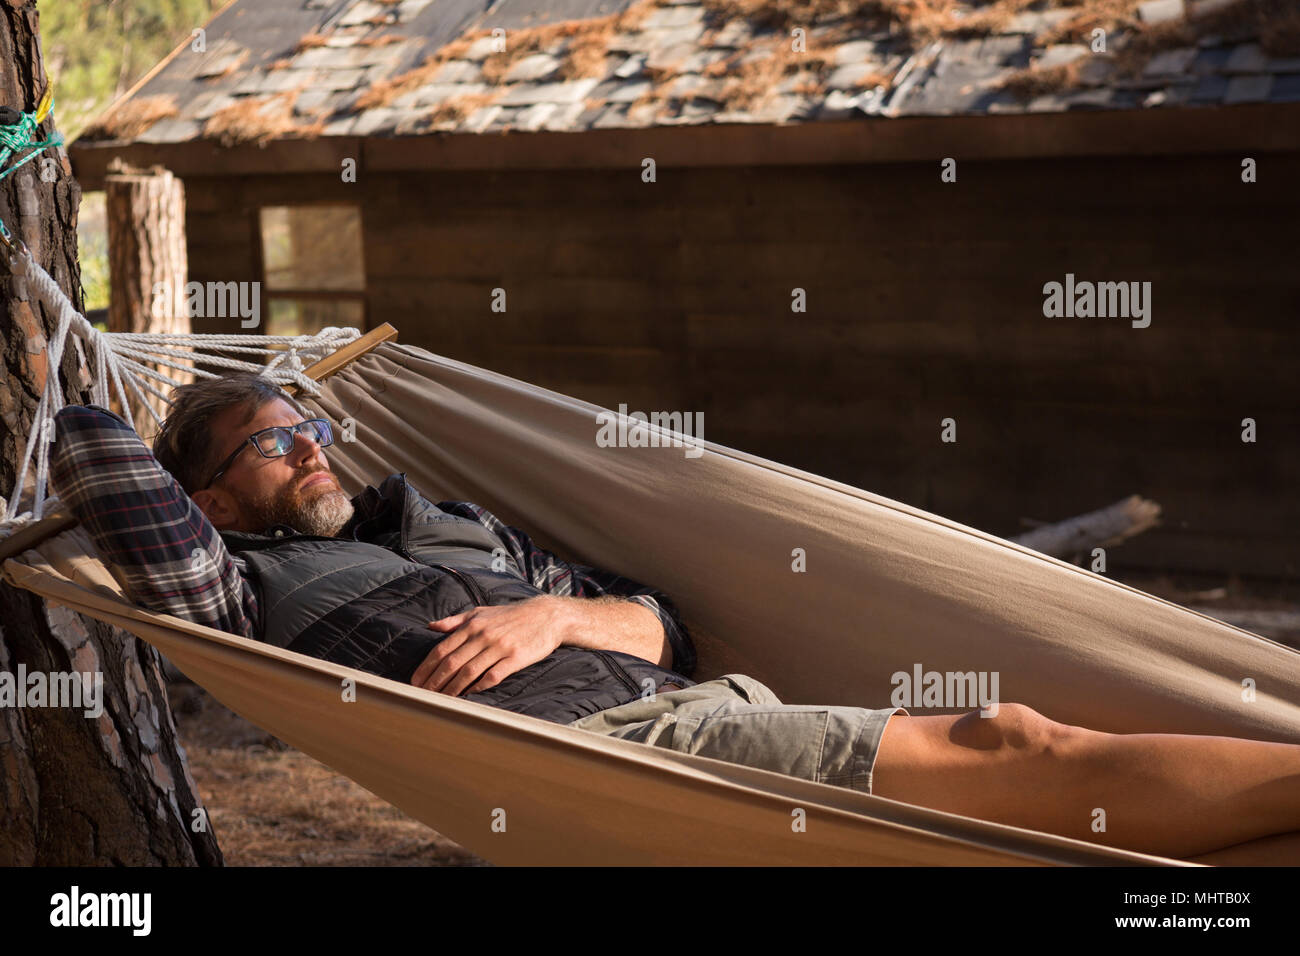 Man relaxing in hammock Stock Photo